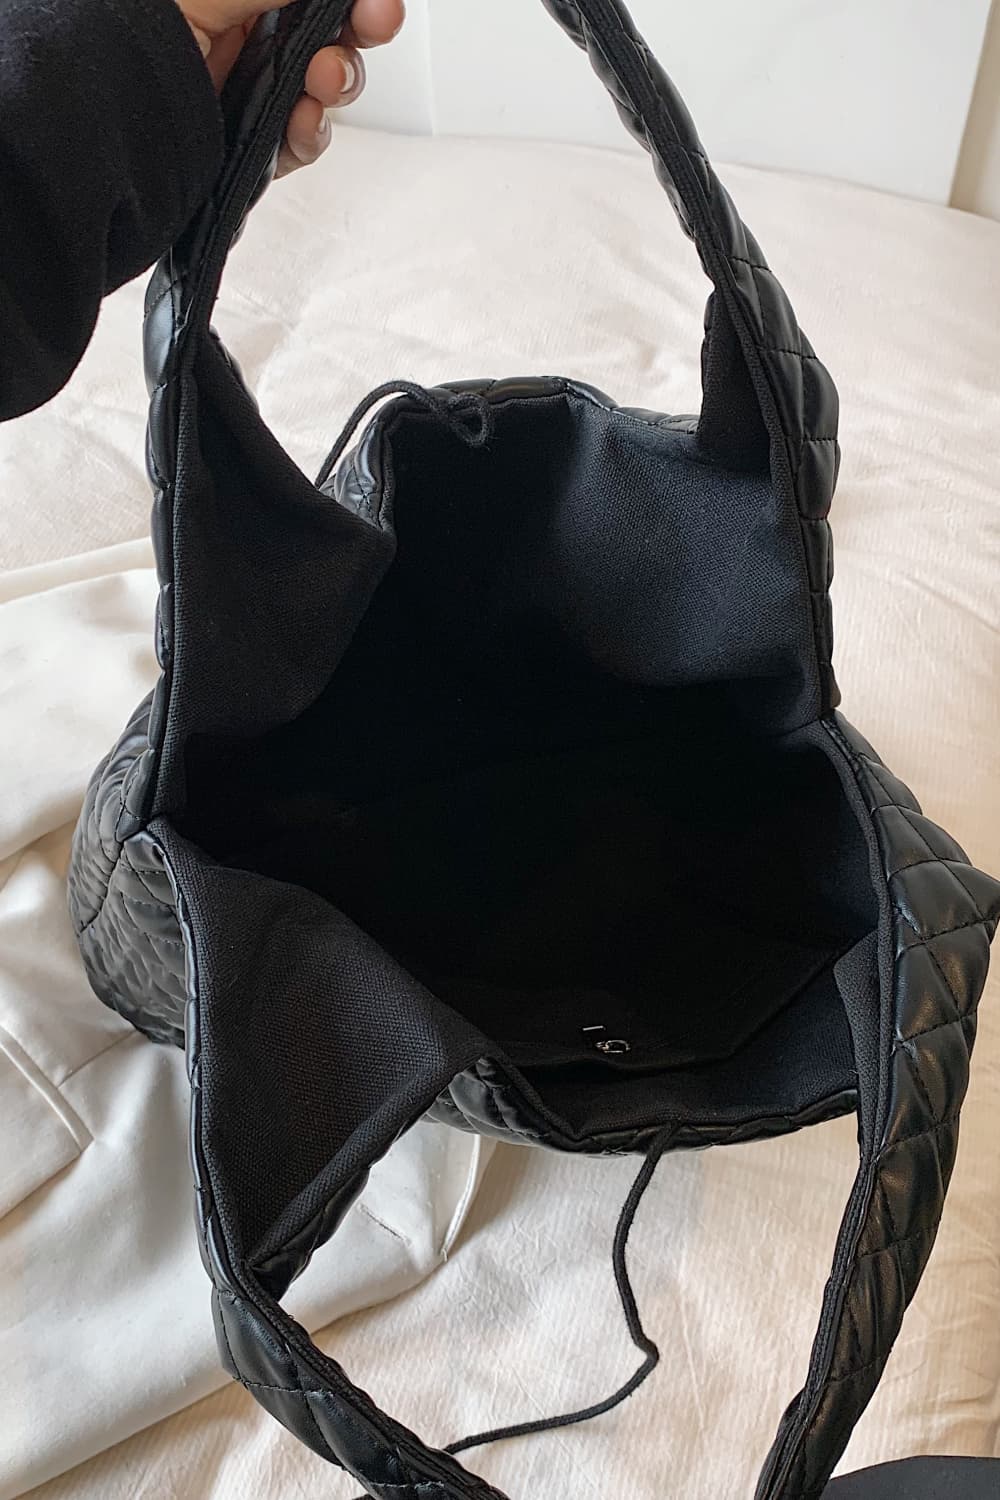 Large Handbag for All-Day Comfort!